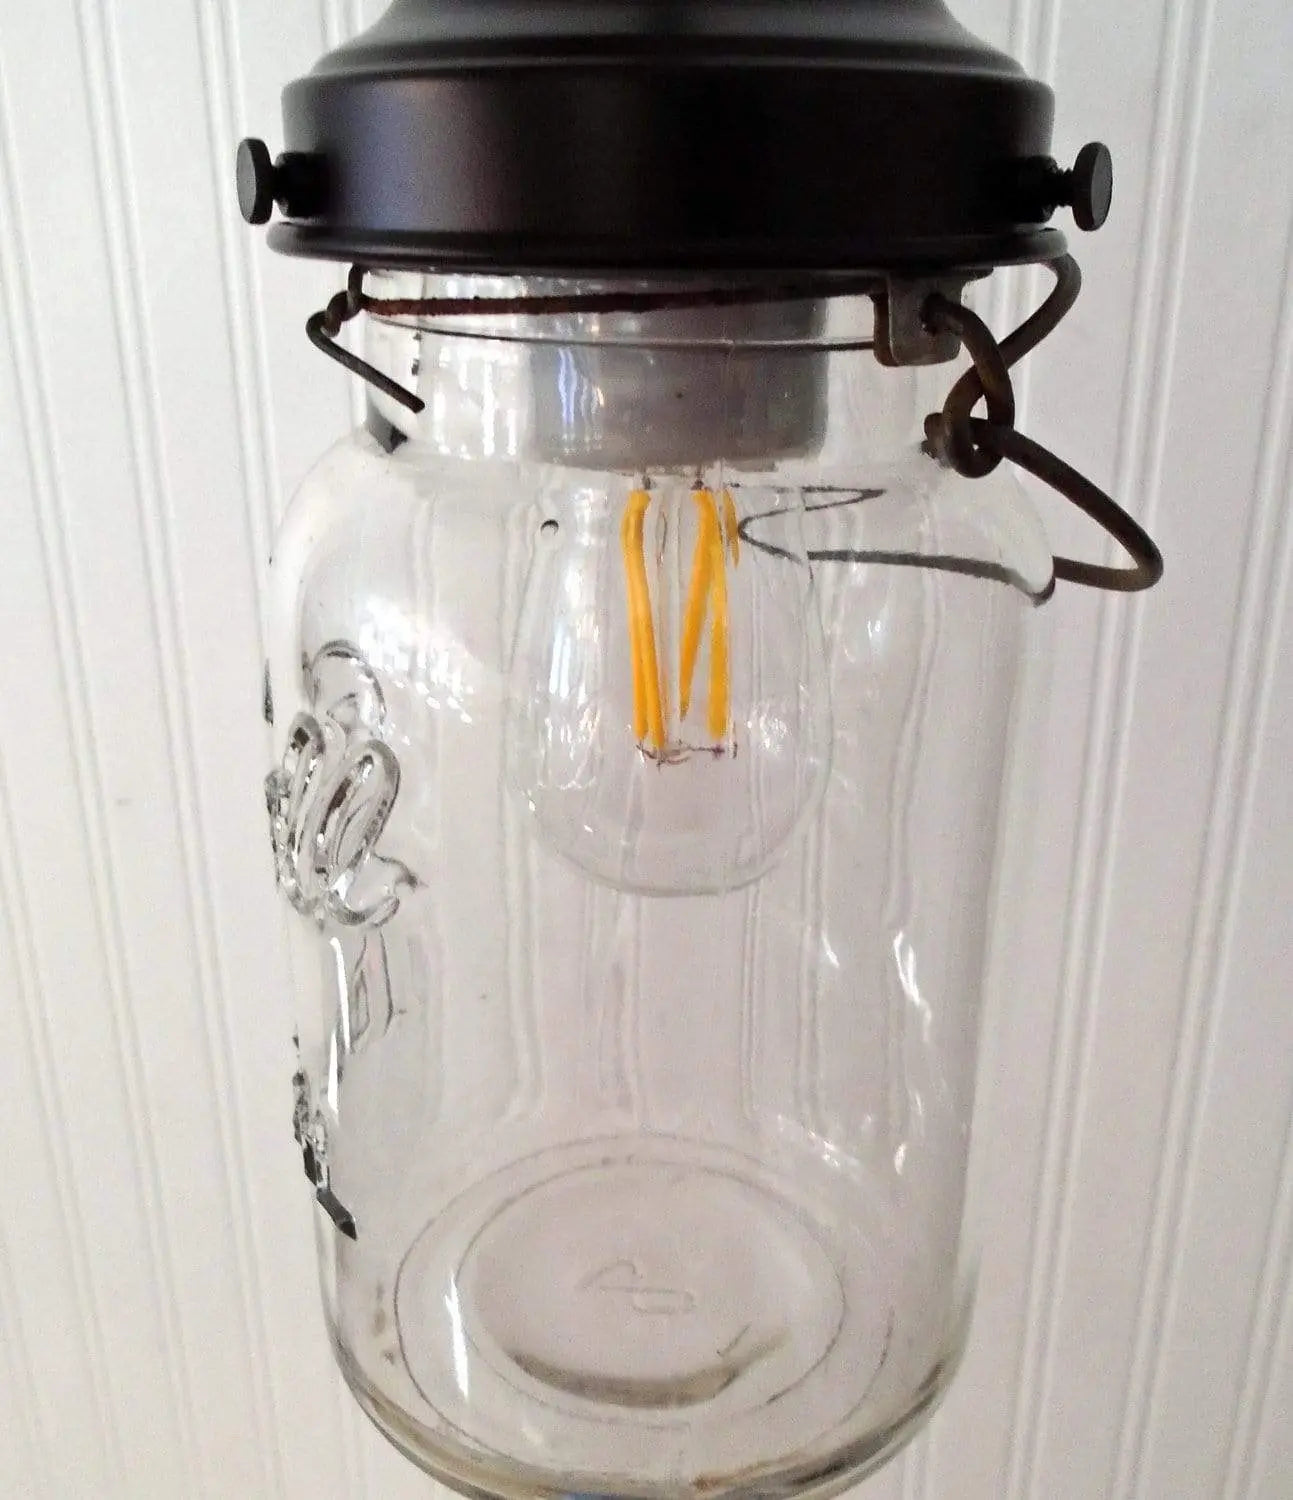 LED Edison Style Light Bulb for Mason Jar Lighting - 40 watts Equivalent - The Lamp Goods